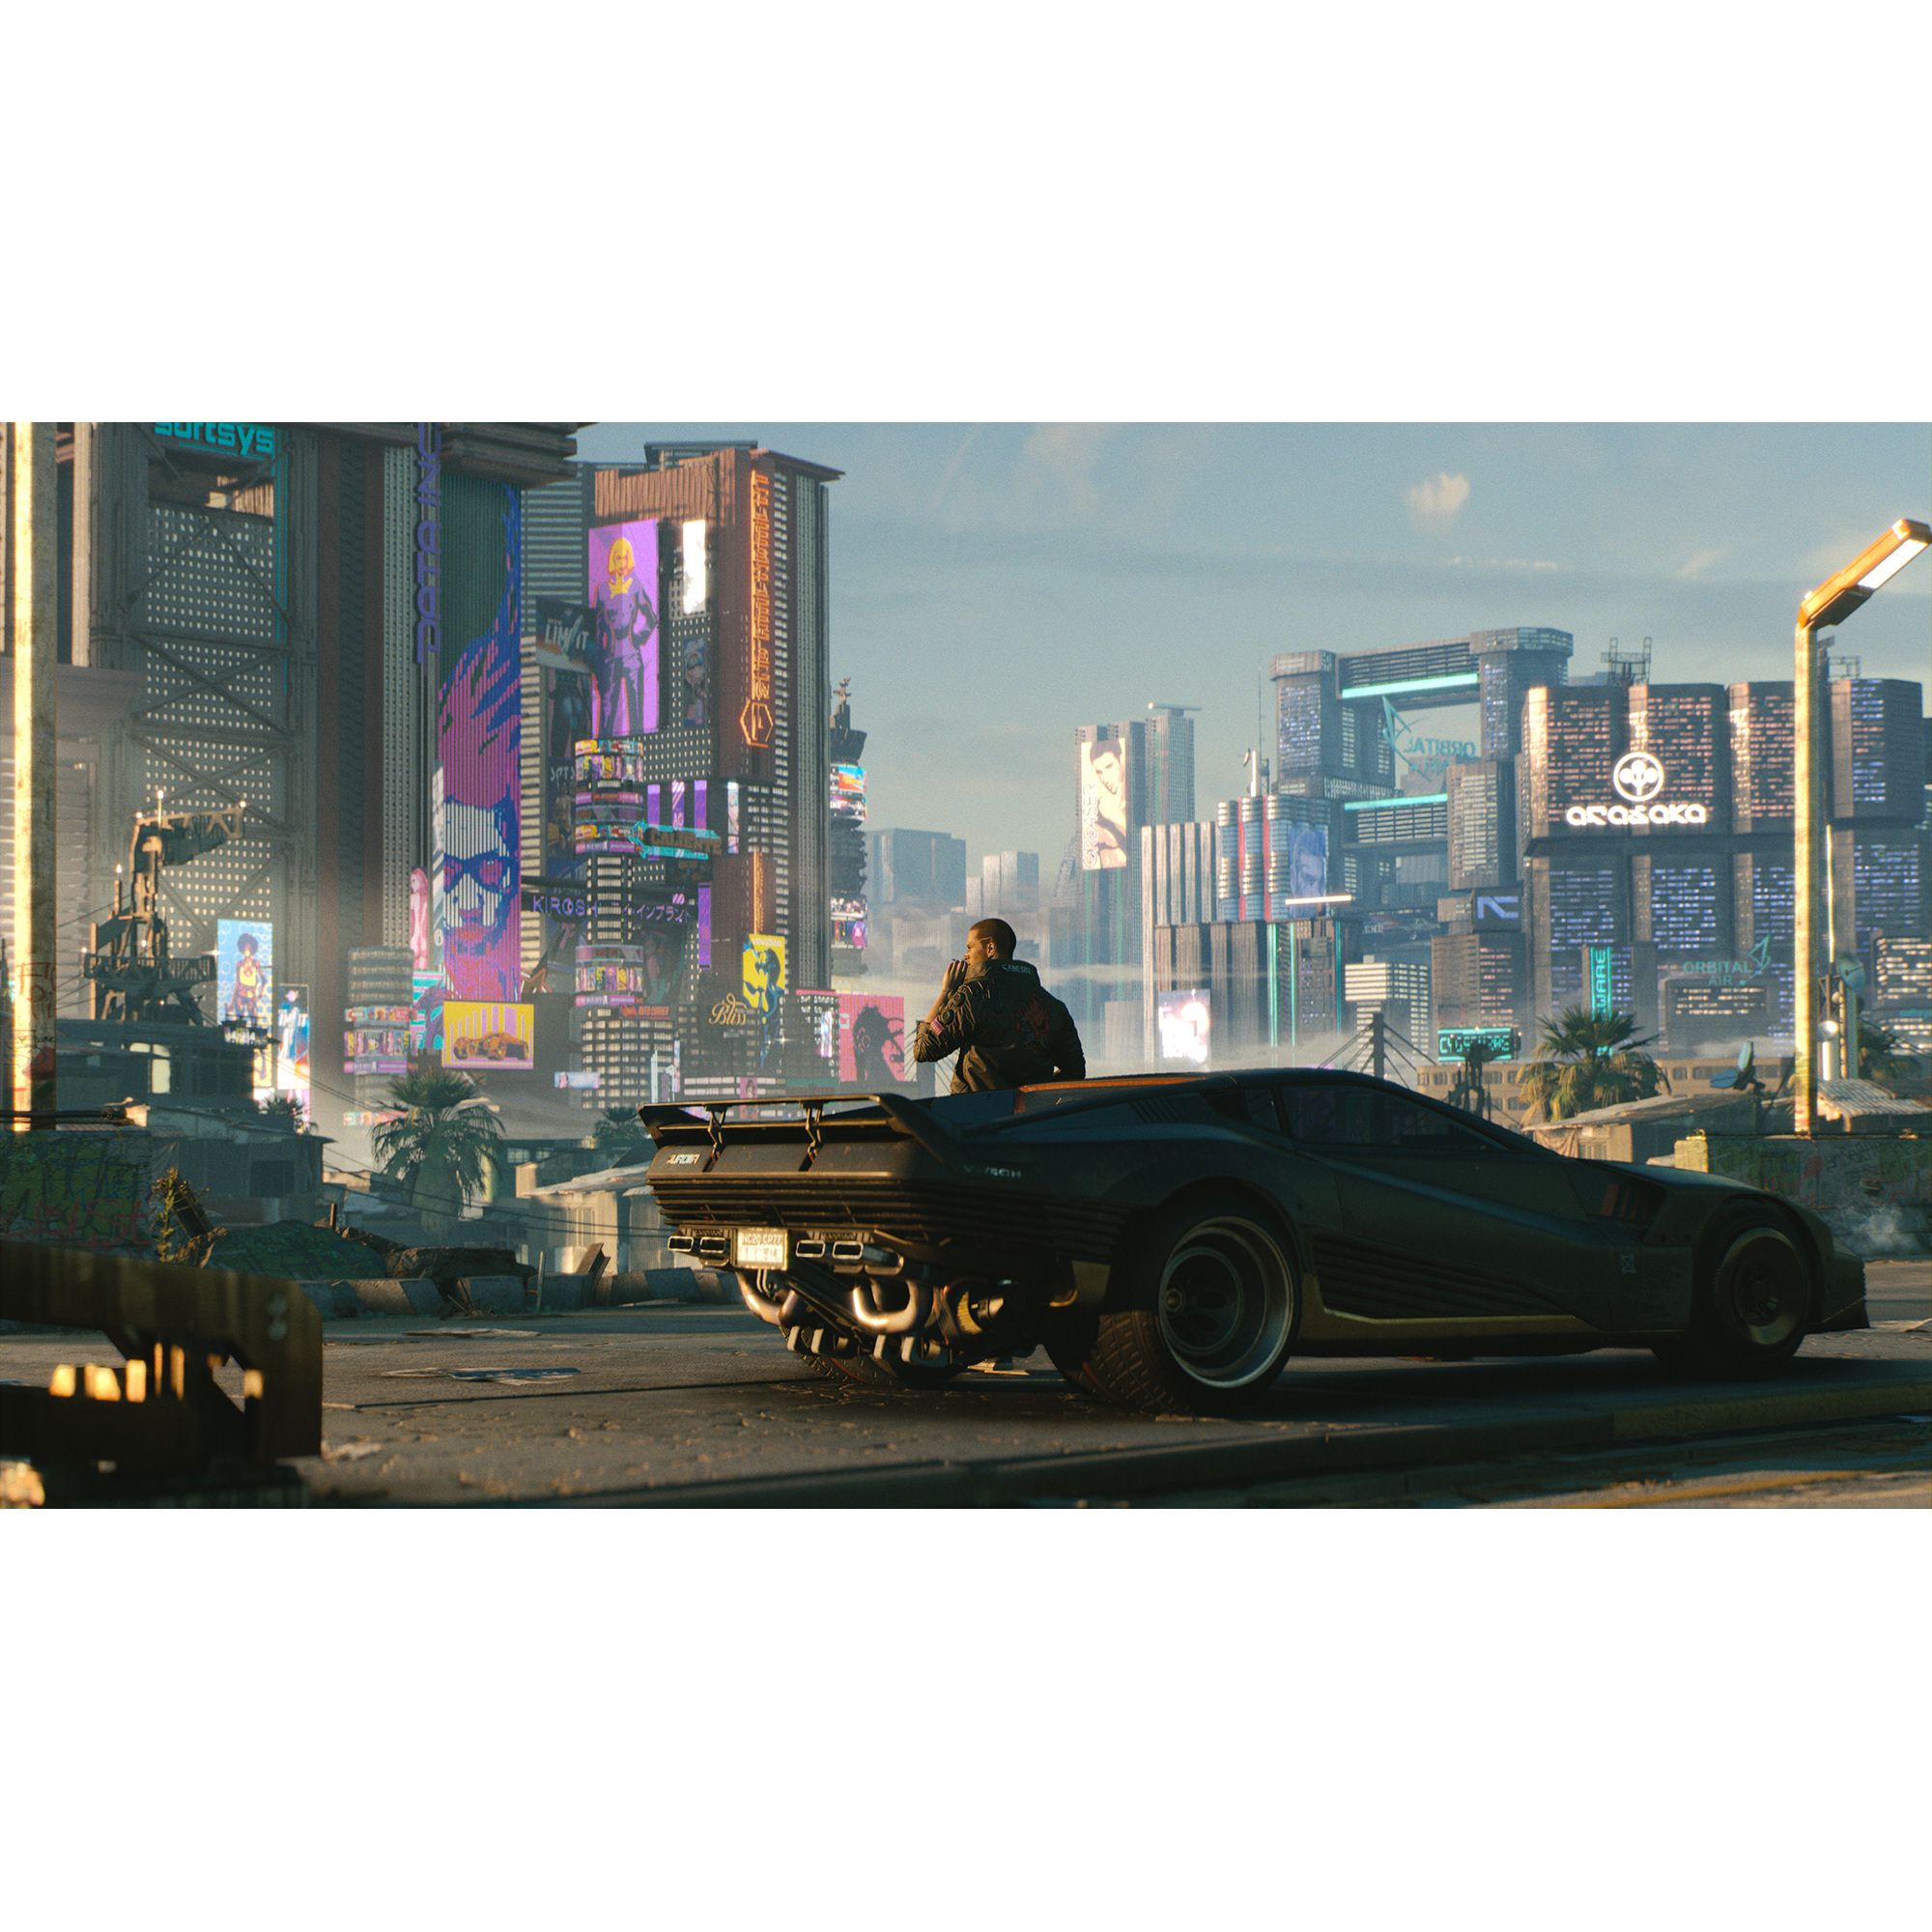 Cyberpunk 2077, Warner Bros, Xbox One - image 10 of 13